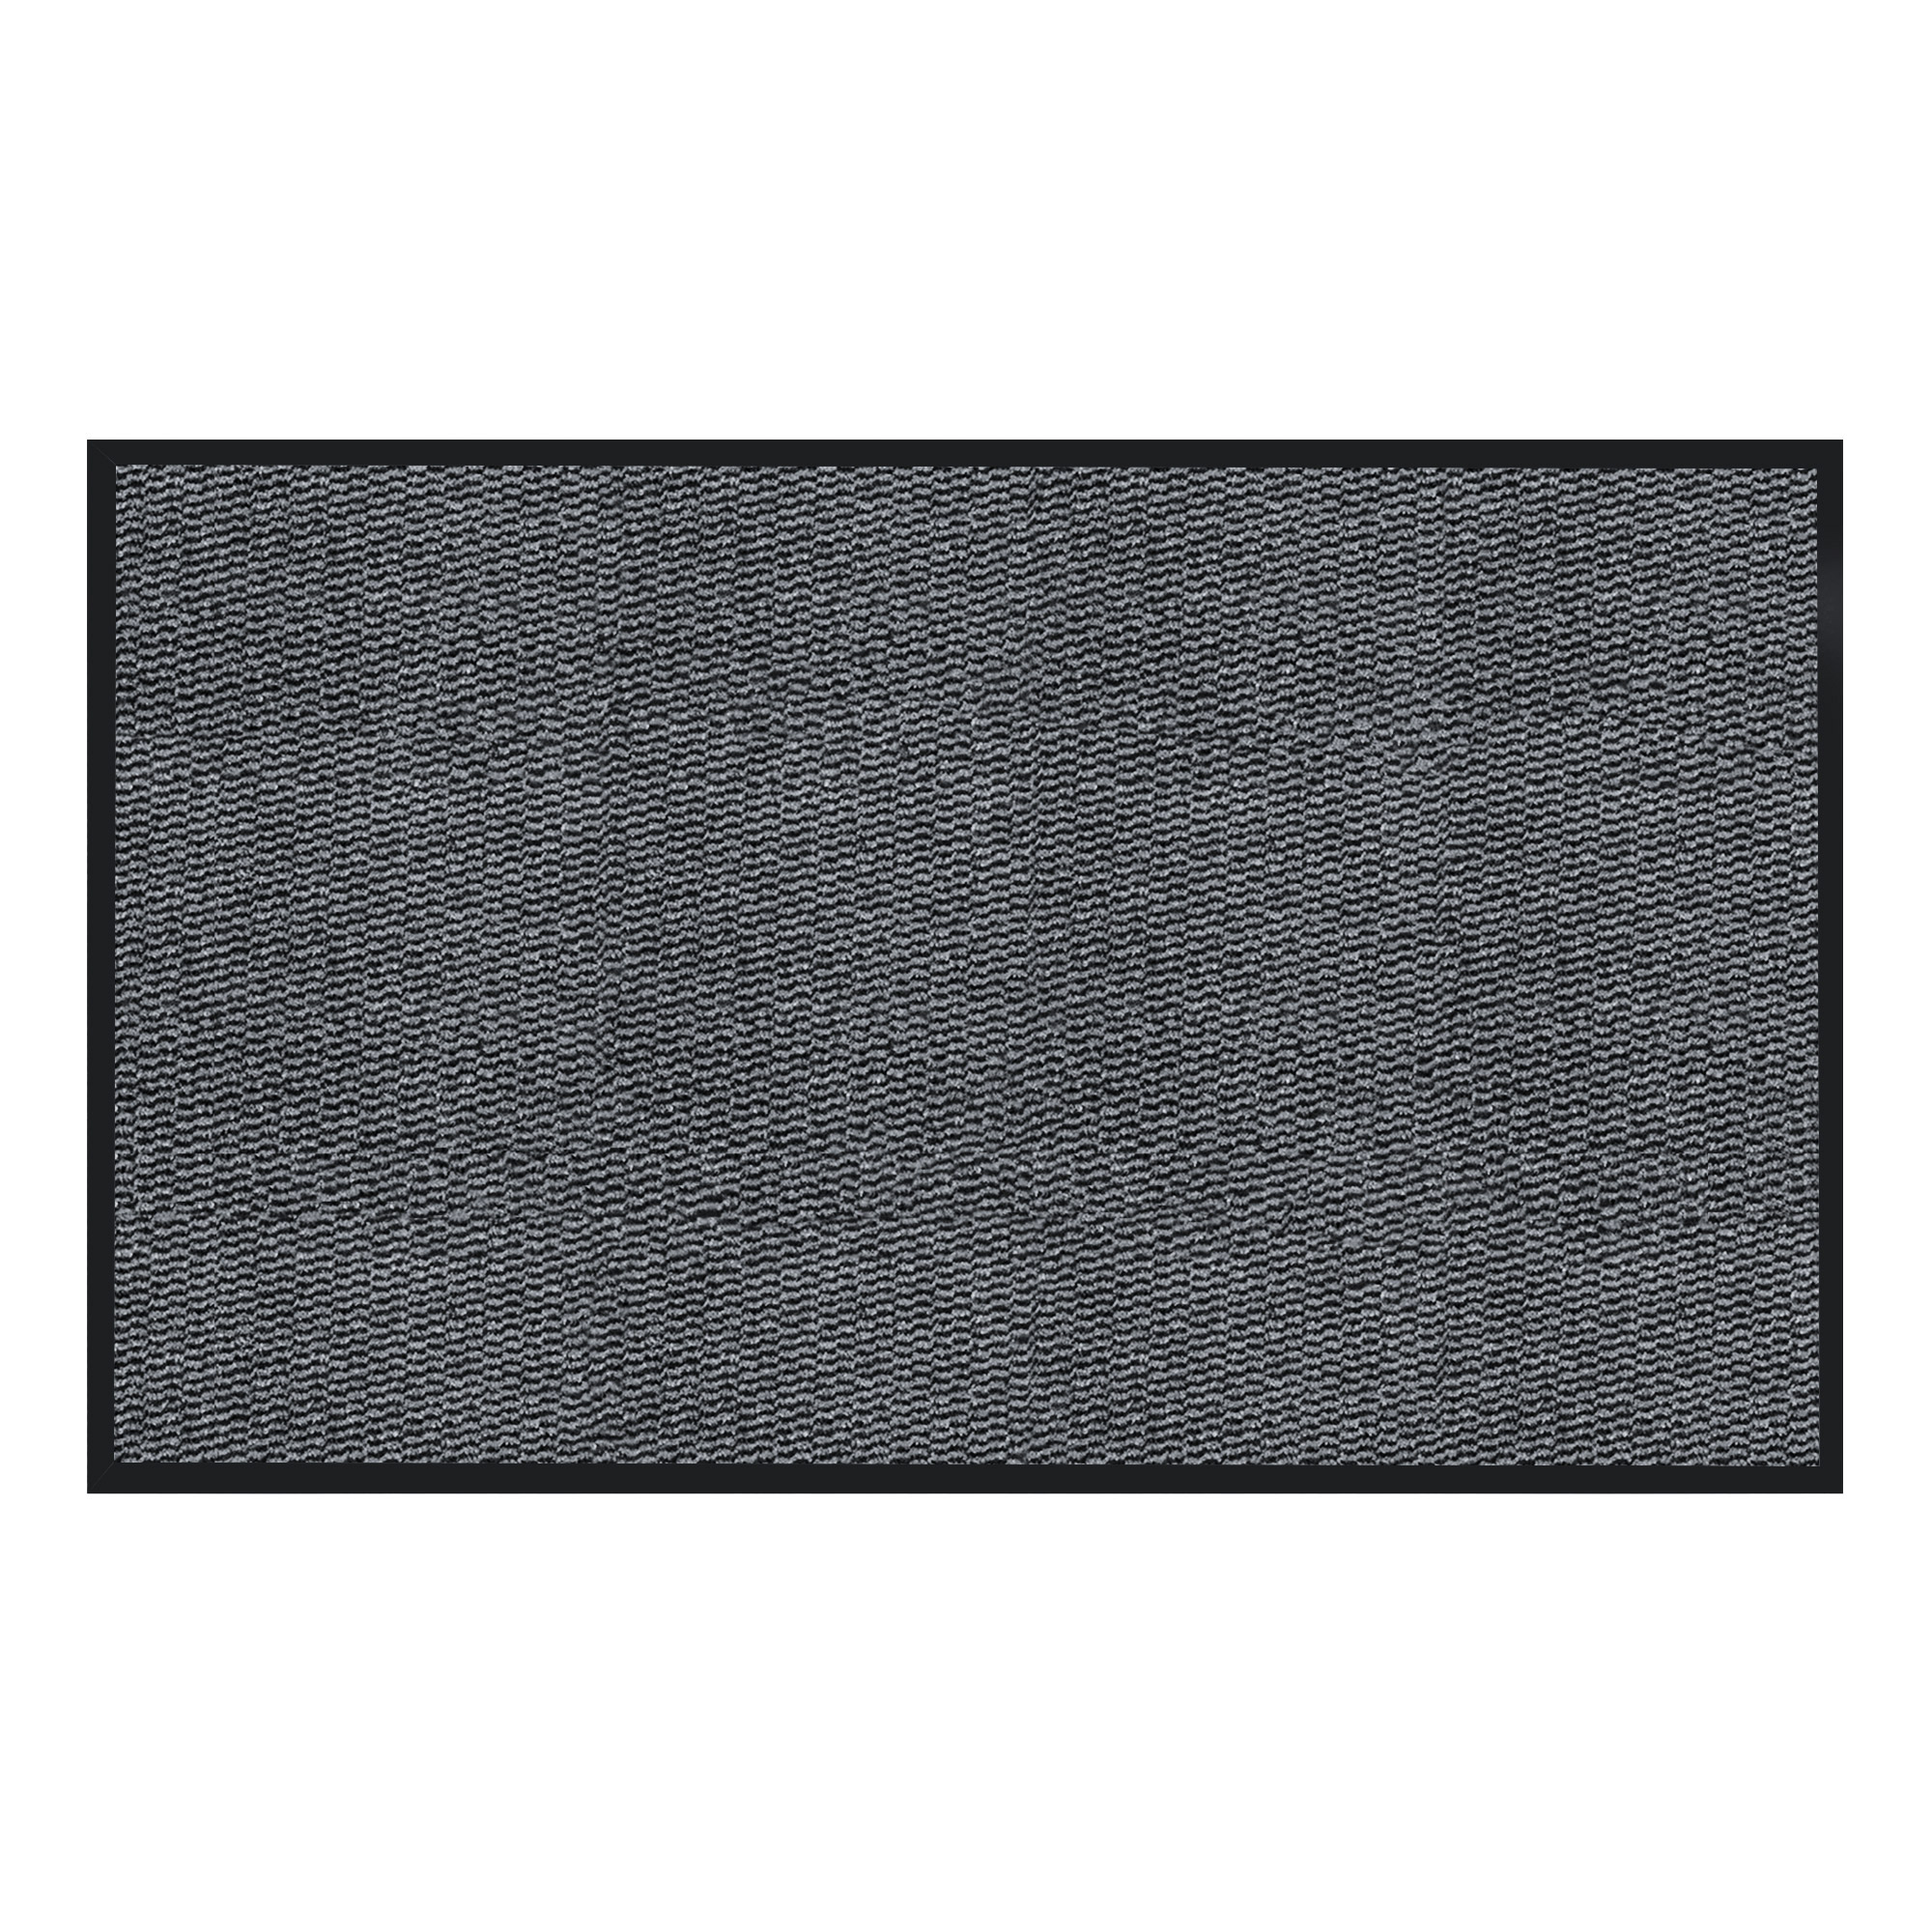 Коврик придверный X Y Carpet Faro Серый 90Х150 коврик silverstone carpet м6 серый 60х90 см